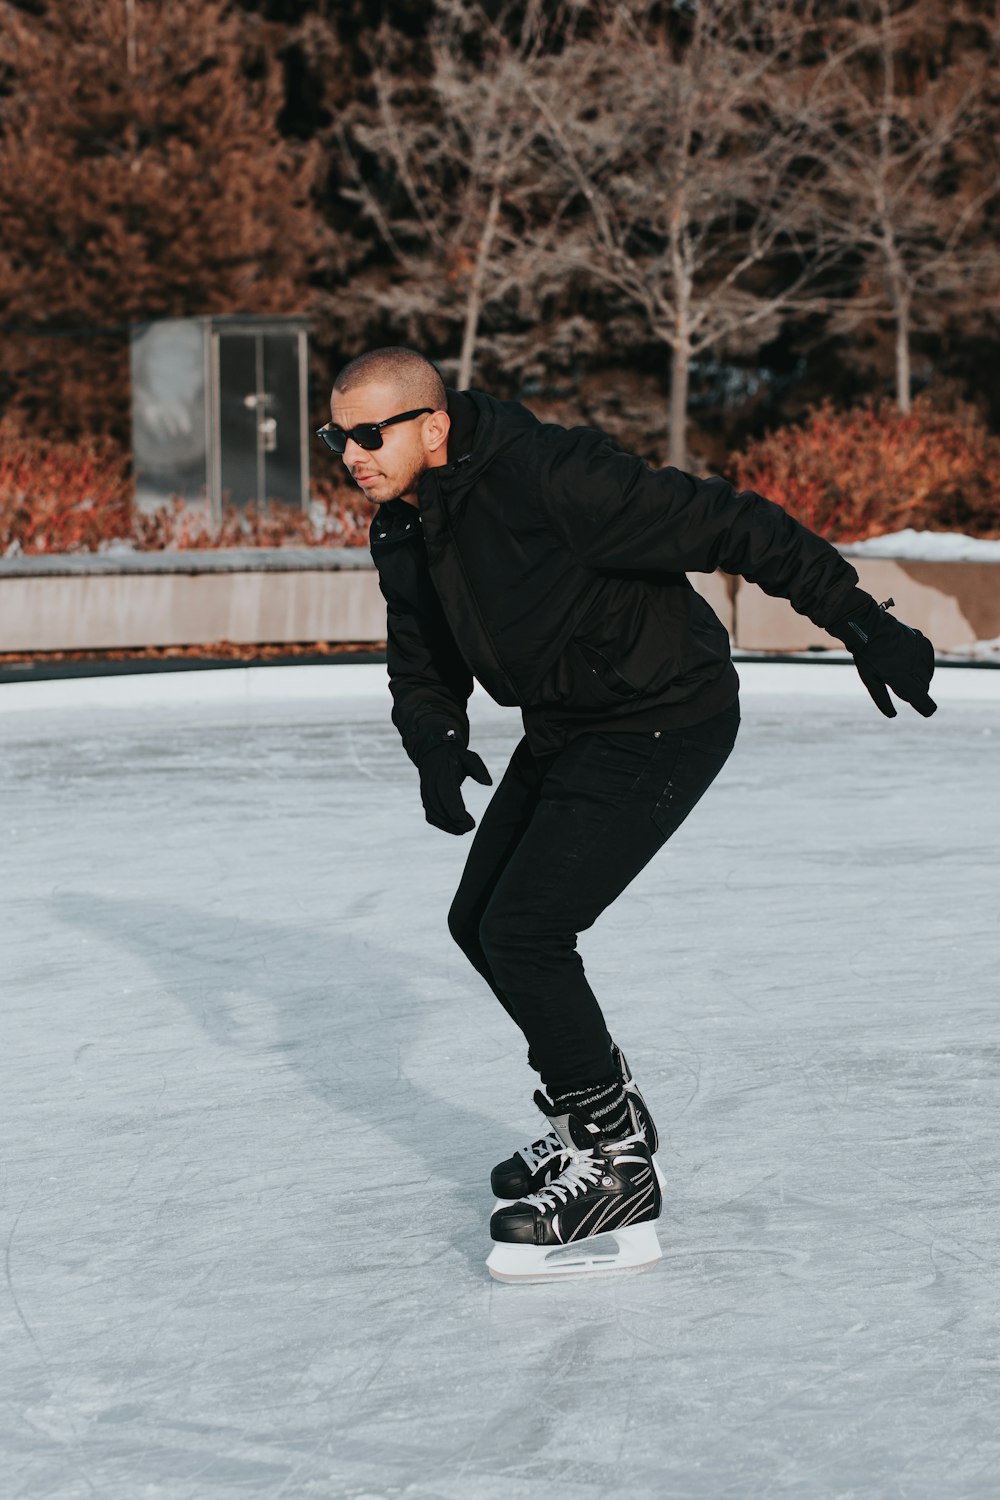 man in black jacket ice skating